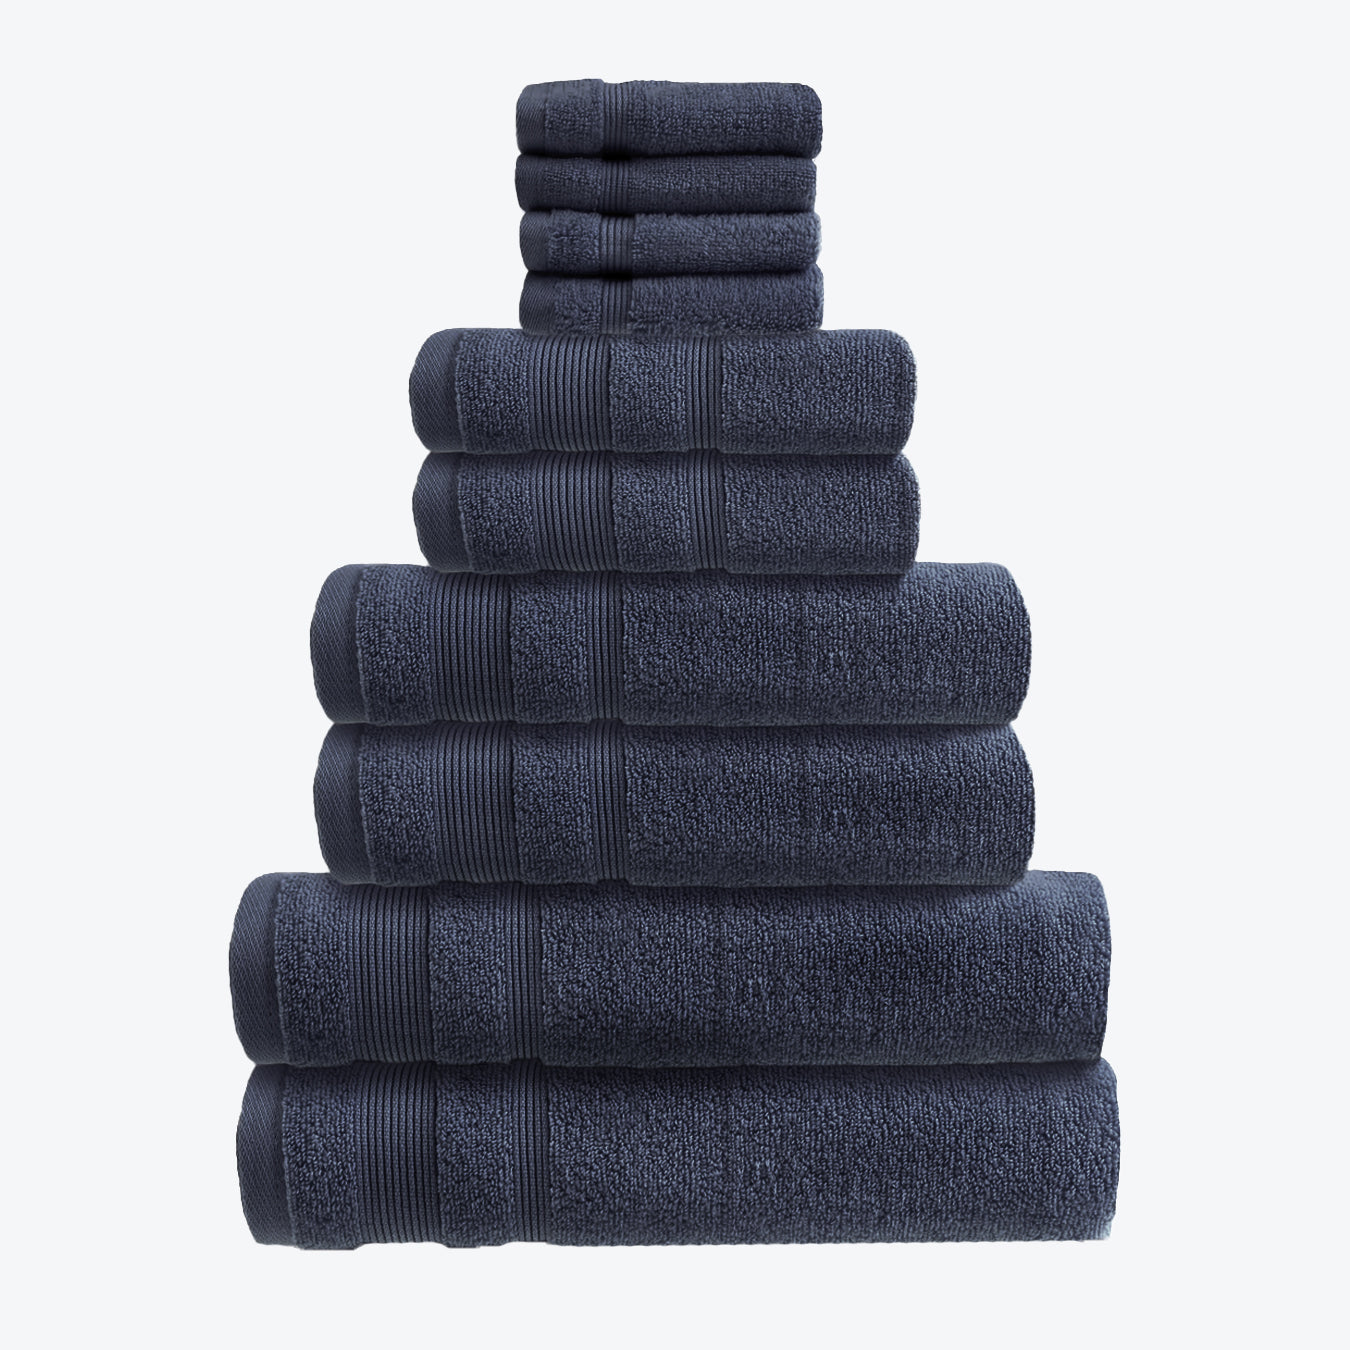 Navy Blue Zero Twist 10pc Towel Set Egyptian Cotton Bathroom Towel Bale. Hand Towels, Bath Towels, Bath Sheets, and Face Cloths